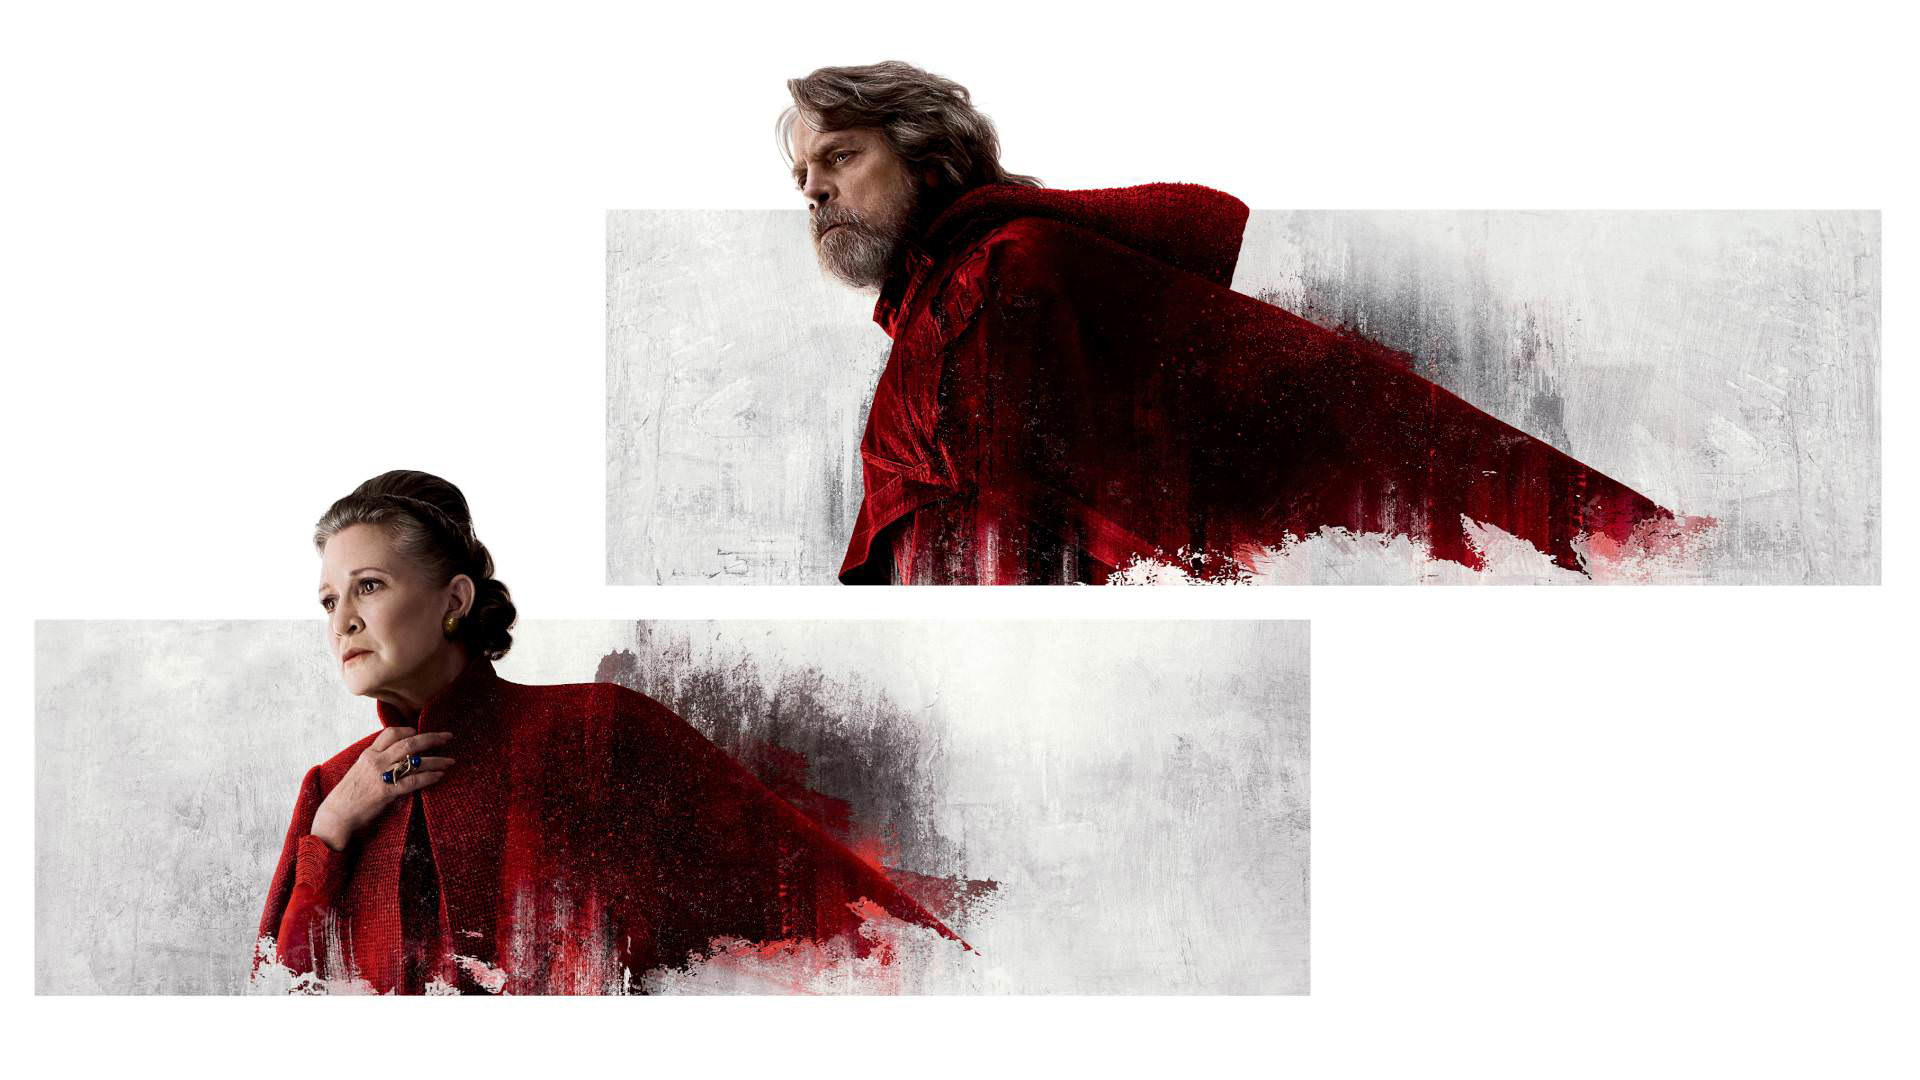 Movie Star Wars: The Last Jedi HD Wallpaper | Background Image